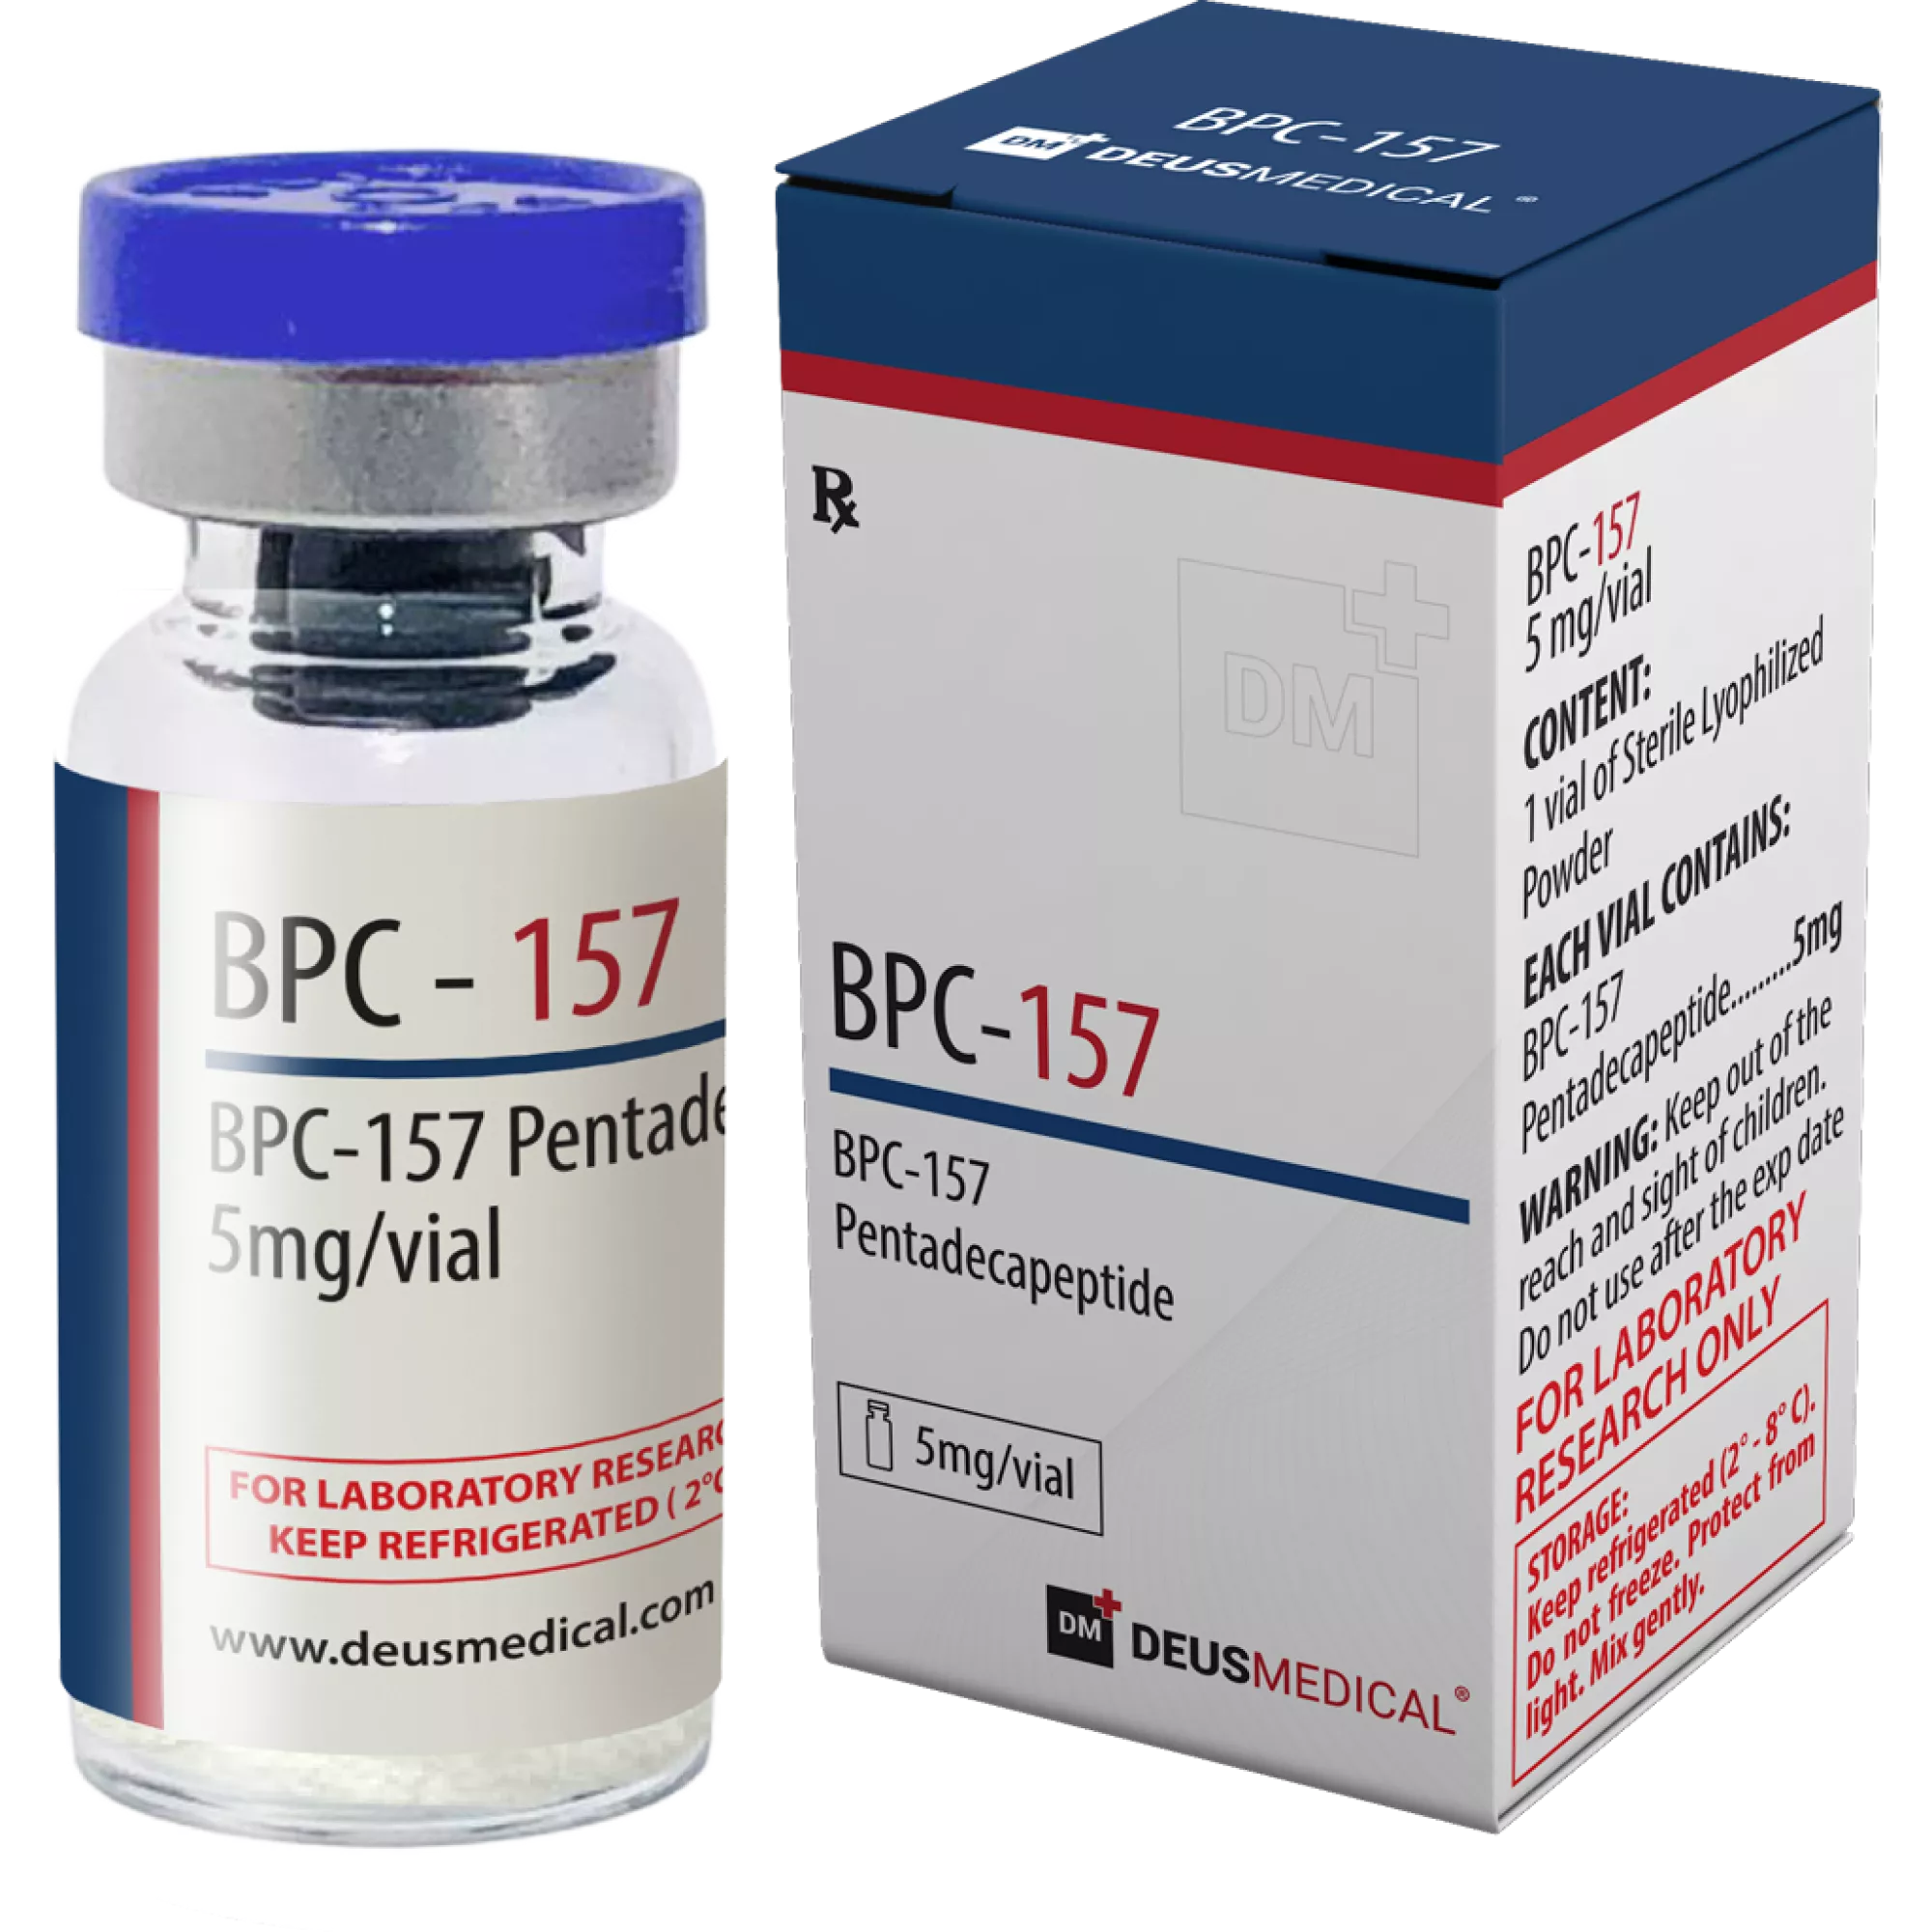 BPC-157 (BPC-157 Pentadecapeptide), Deus Medical, köp steroider online - www.deuspower.shop